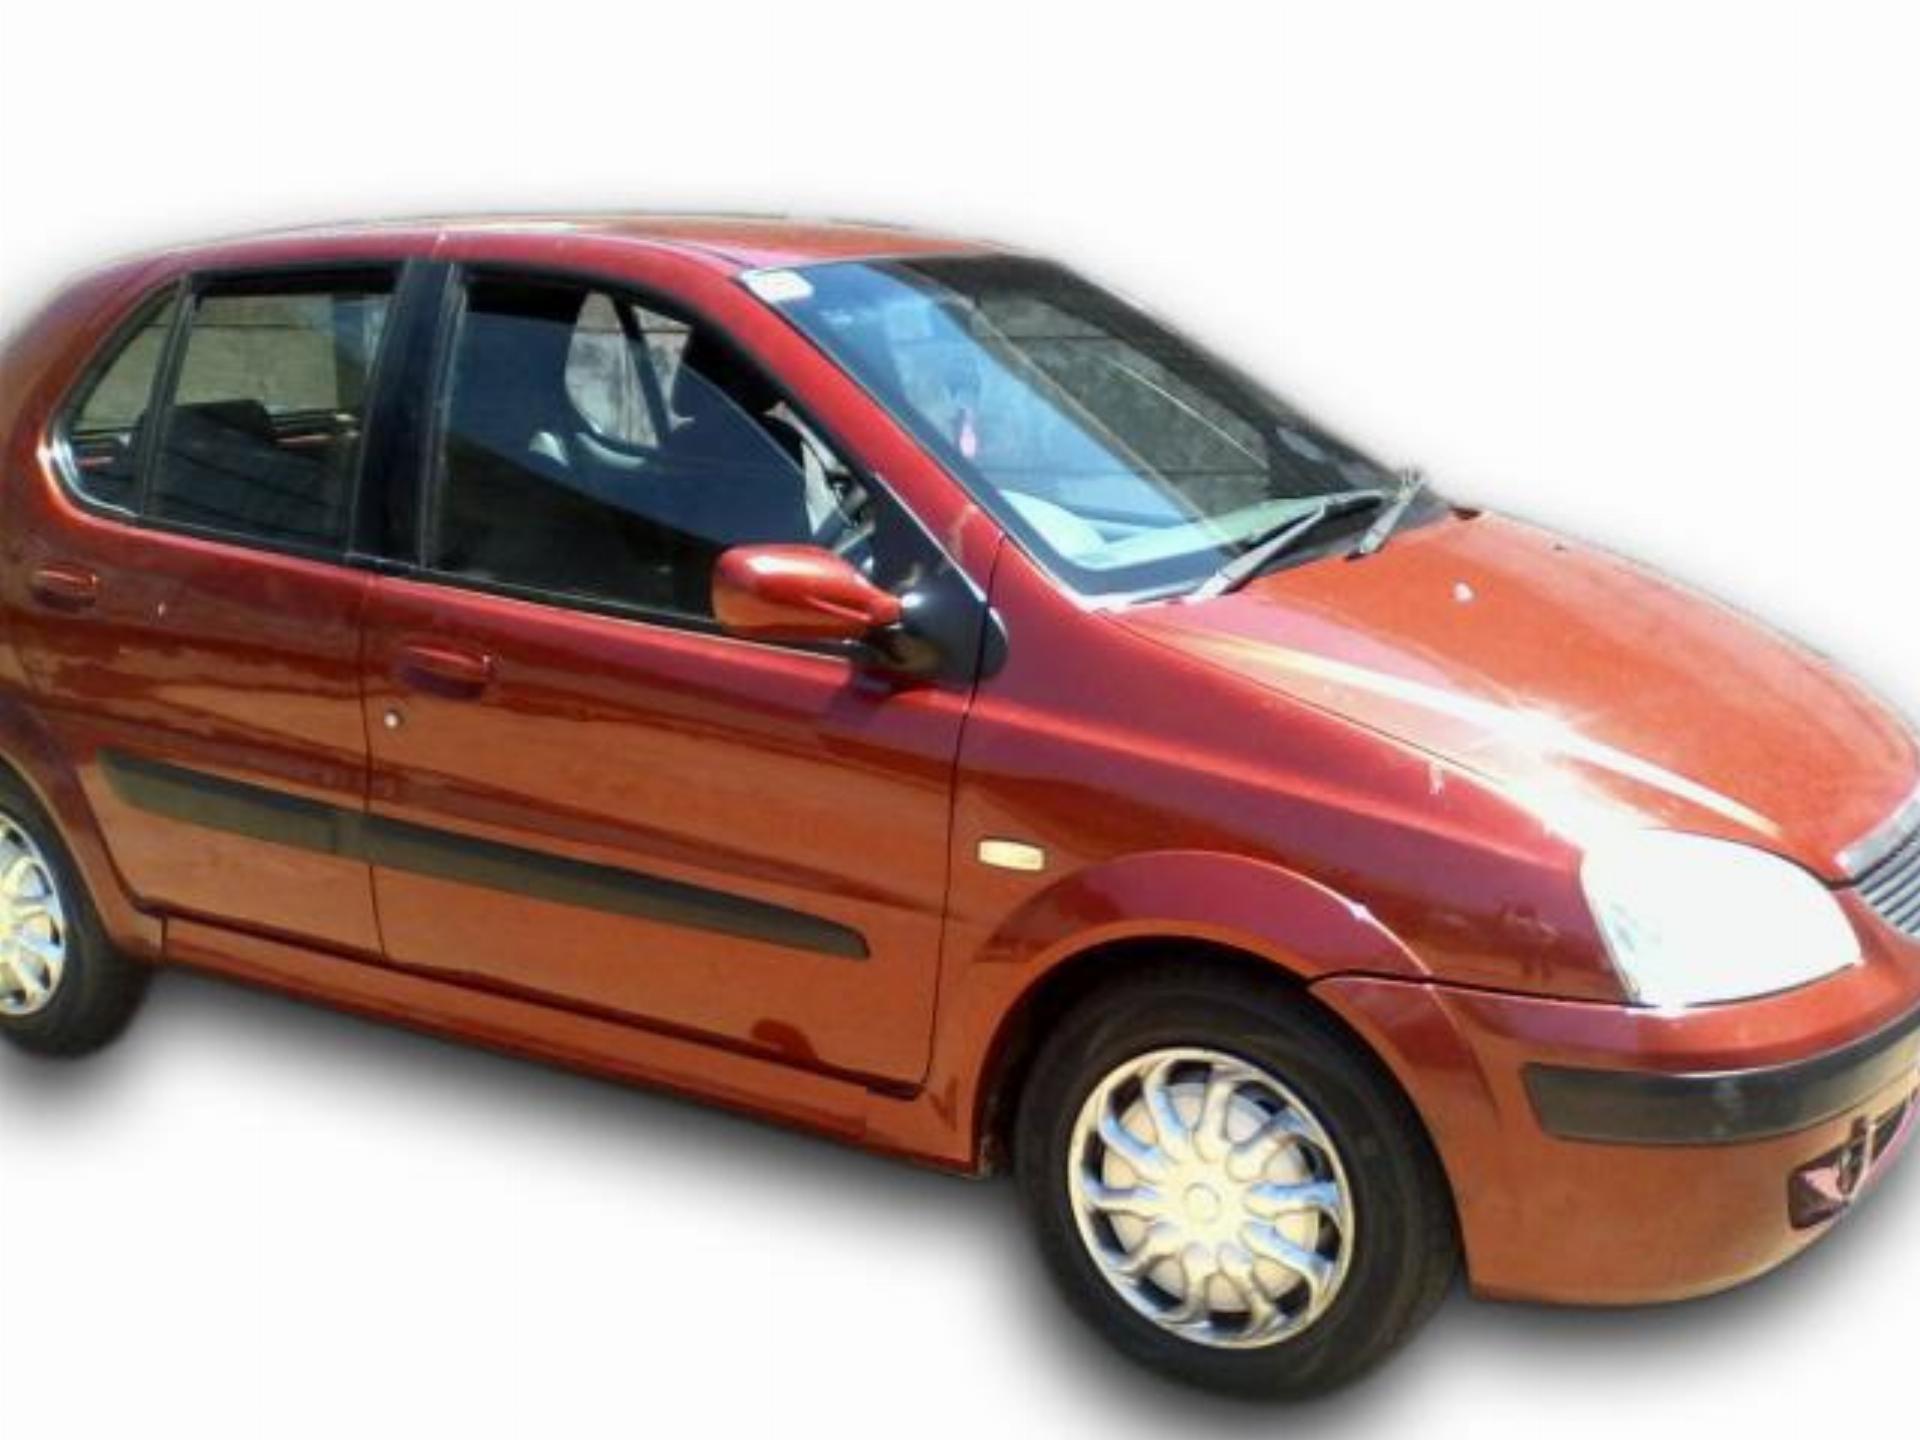 Tata Indica 1.4 DLX 5DR Hatch Back